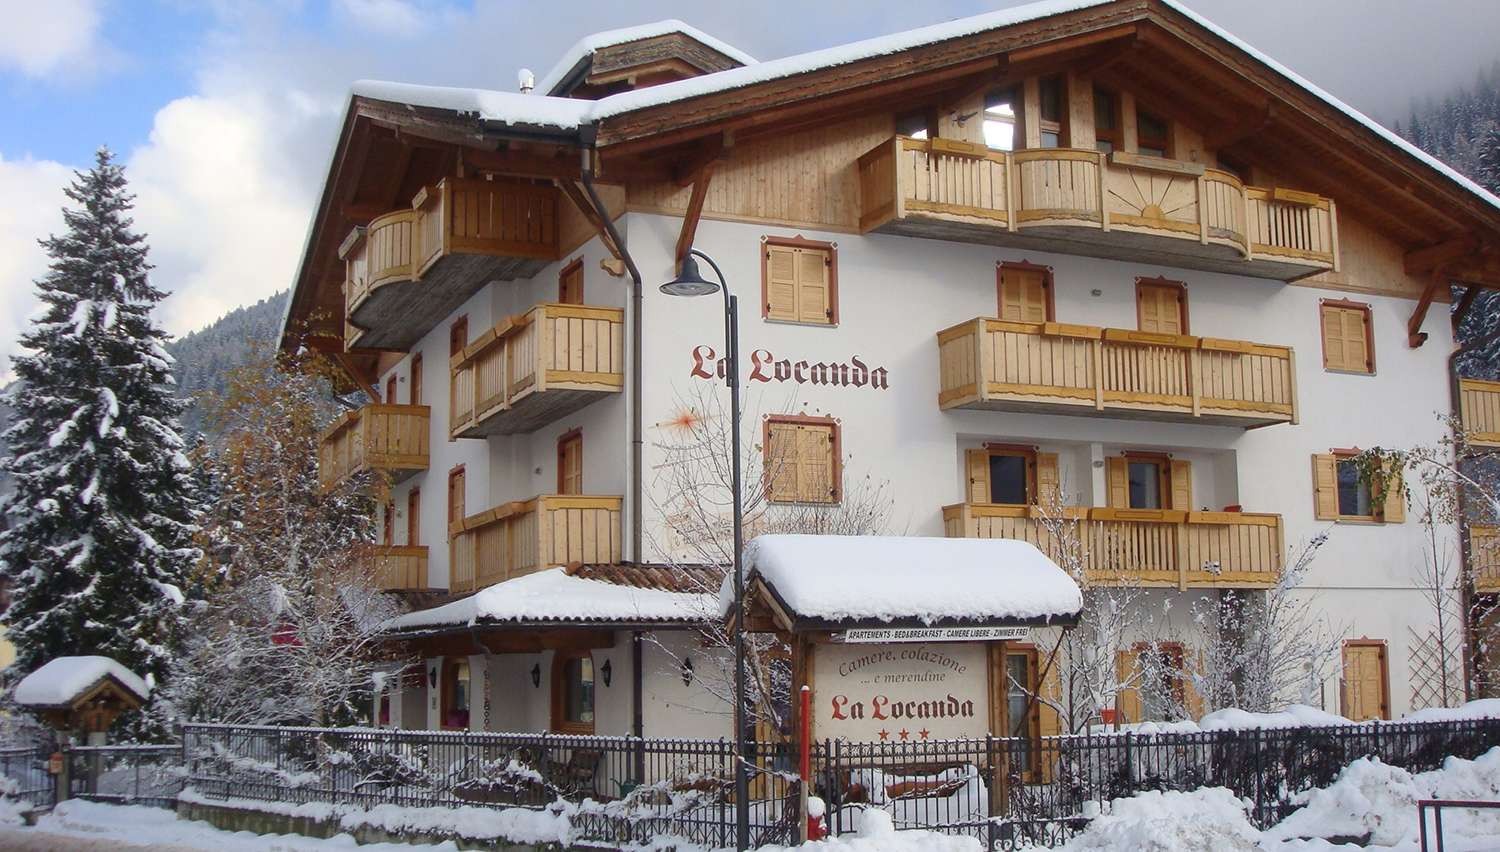                         La Locanda Hotel & Residence
                        